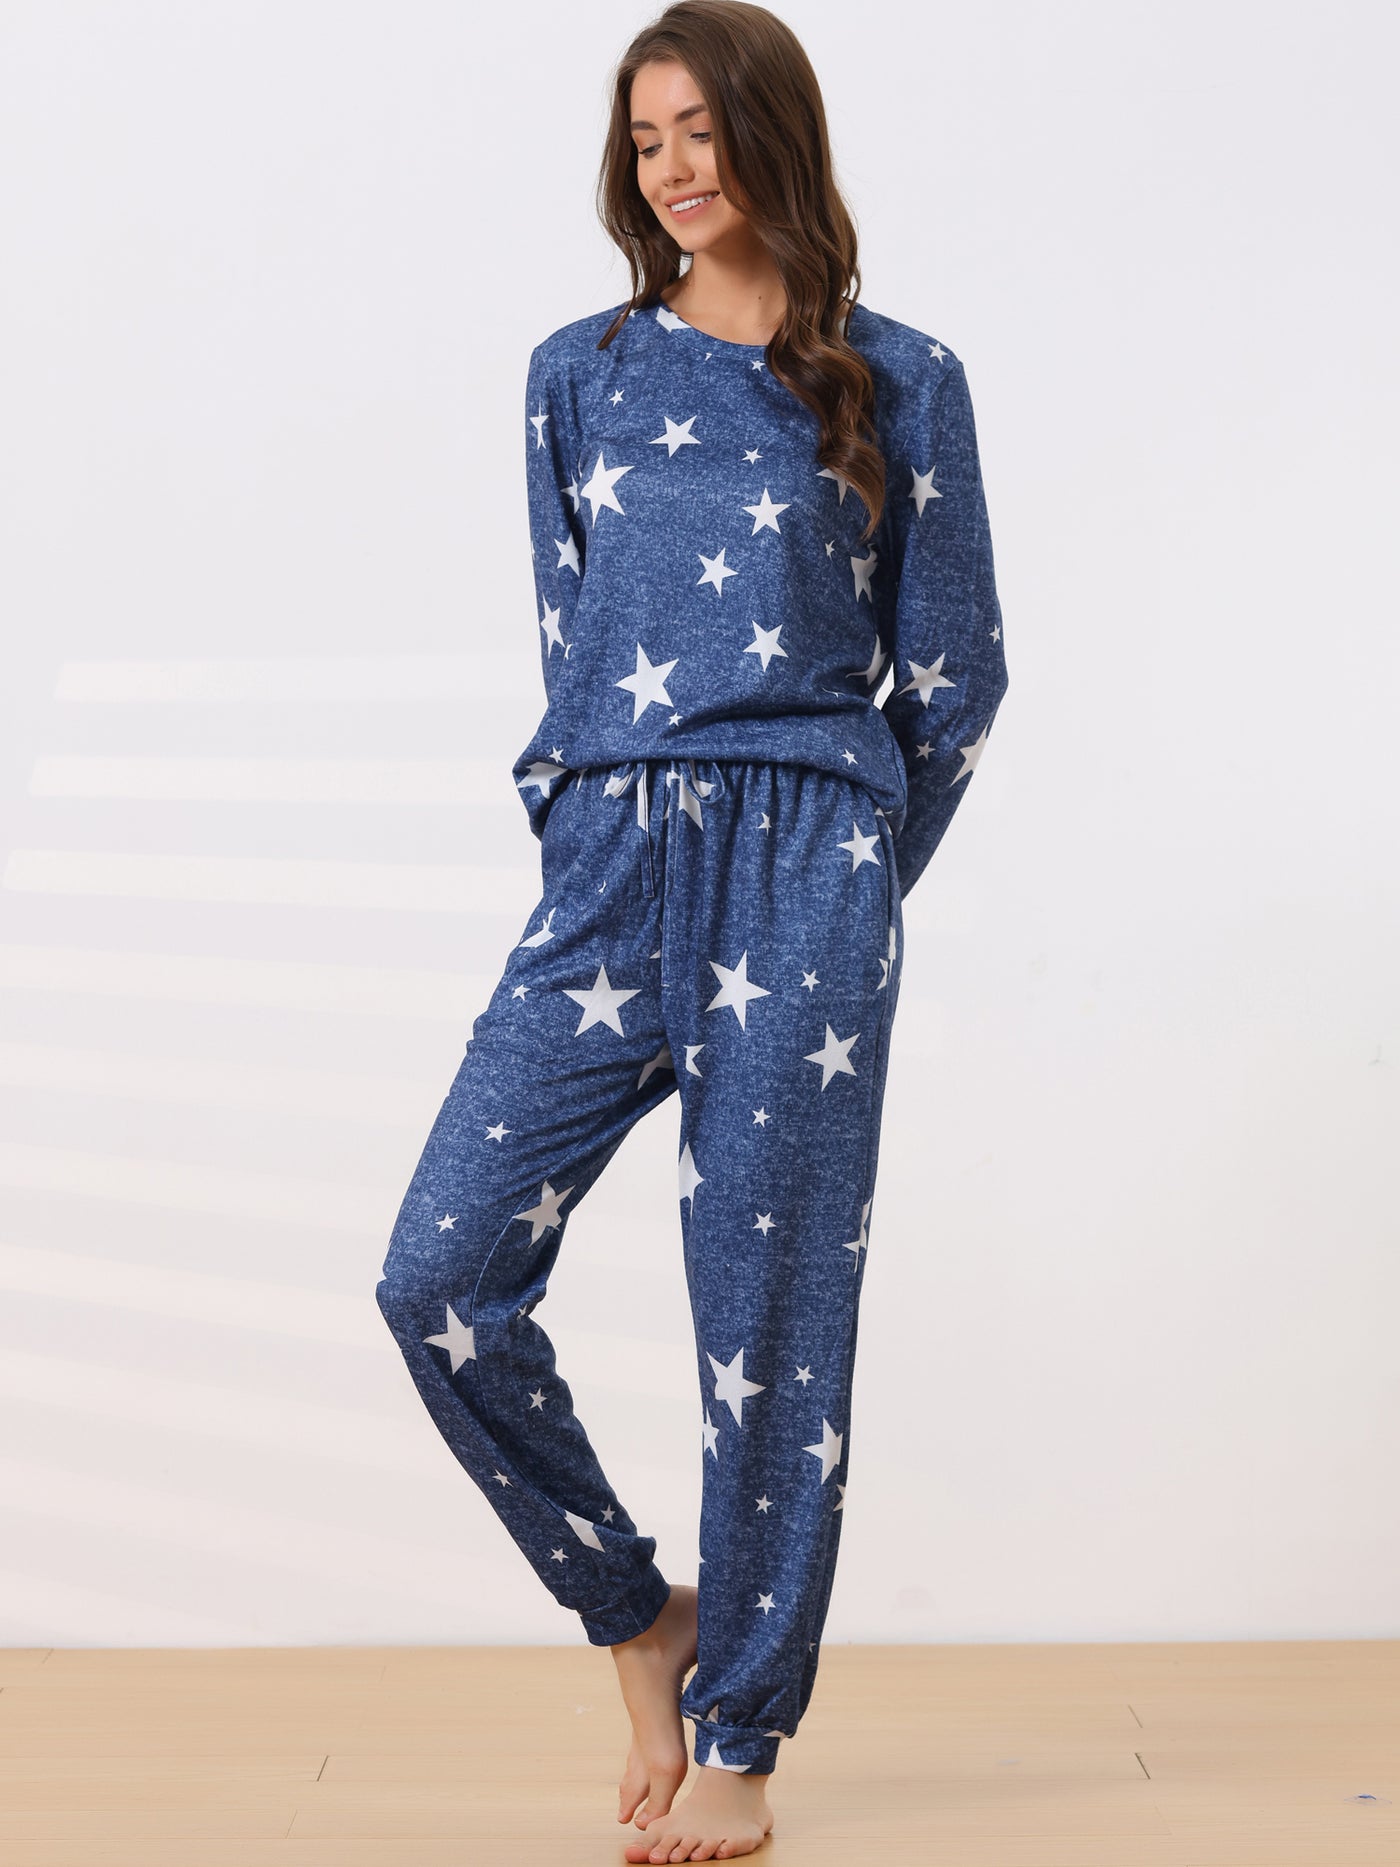 Bublédon Womens Long Sleeve Pajama Sets Kint Printed Pattern 2 Piece Sleepwear